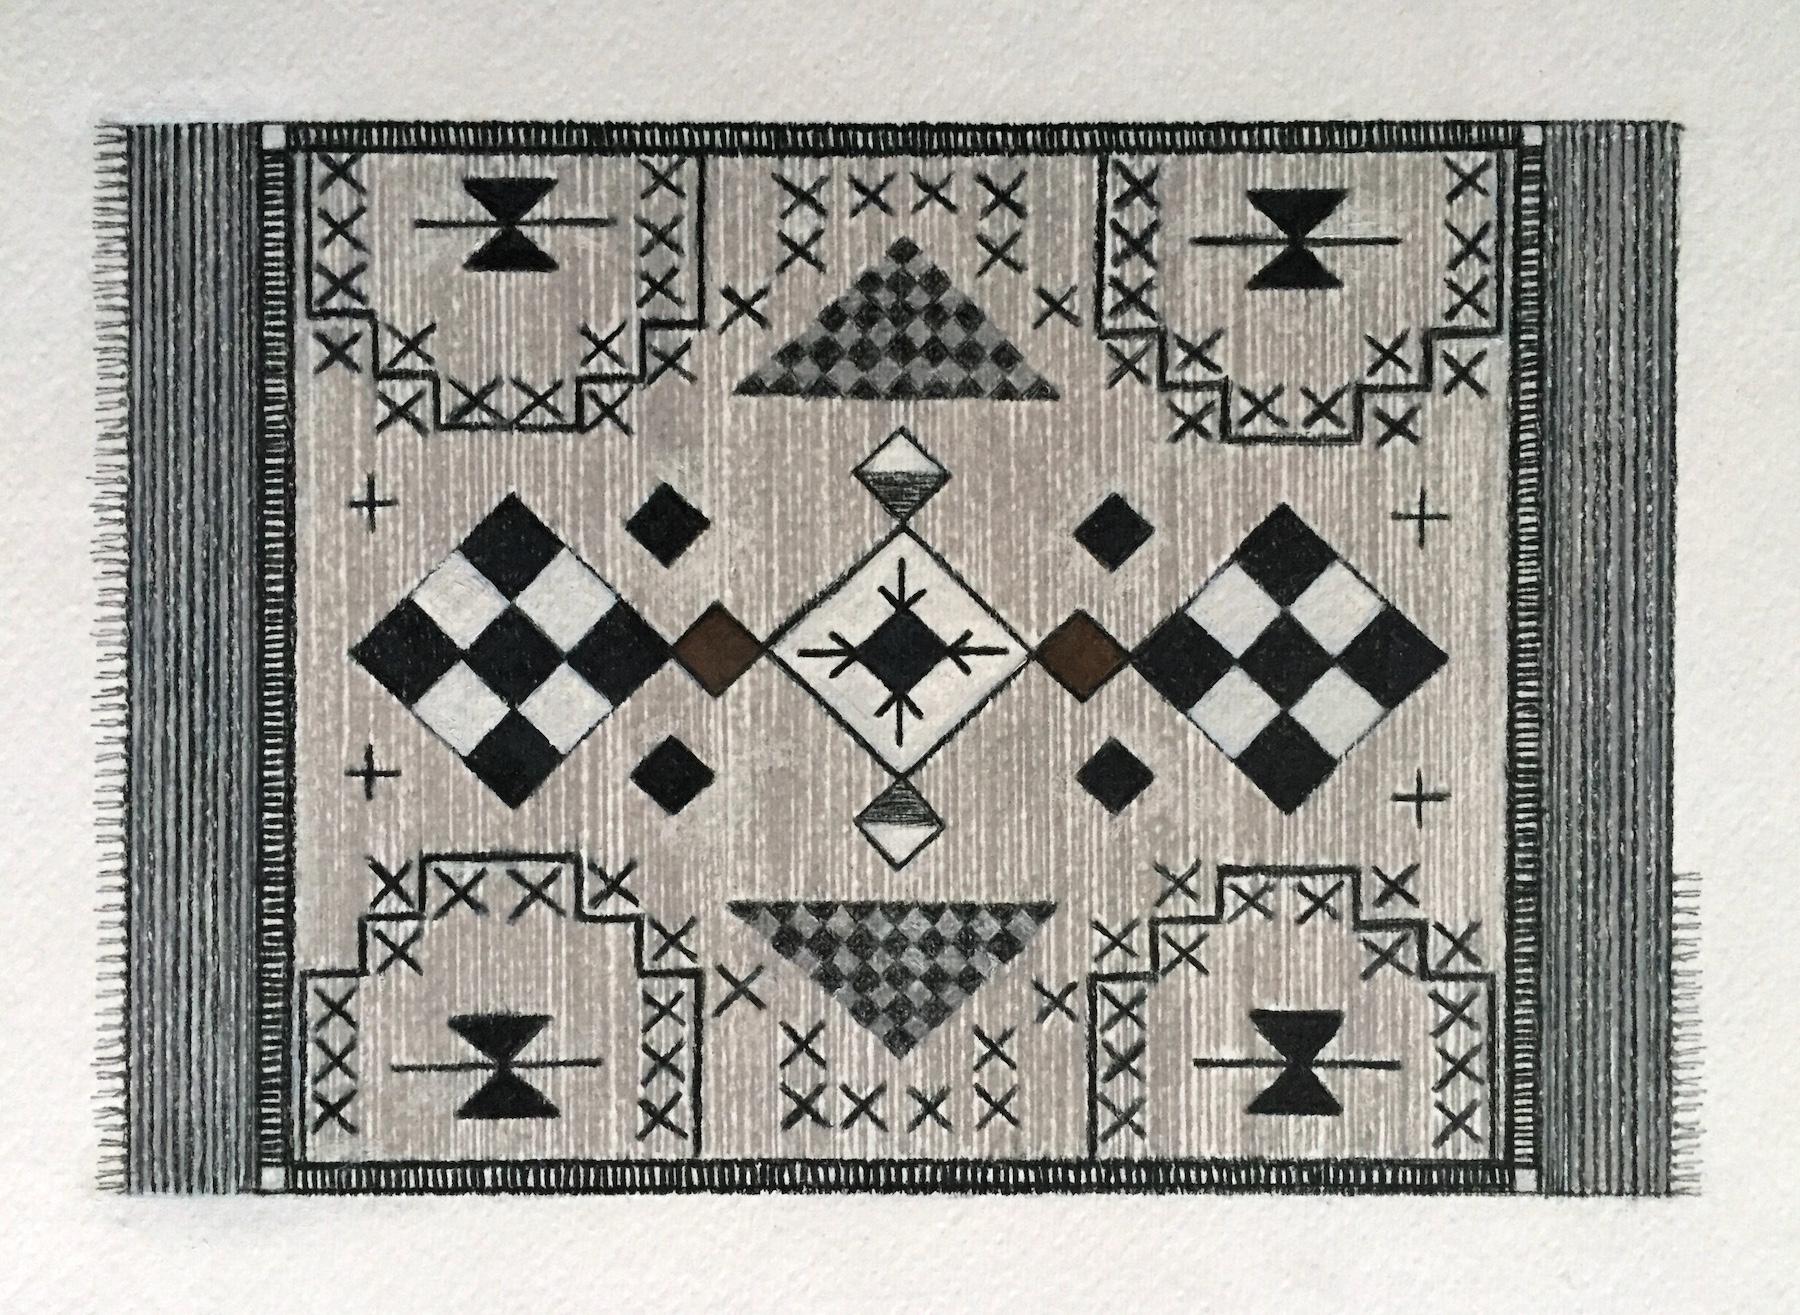 Magic Carpet Ride 3 (9"x12" Navajo Rug, Geometric Pattern, Black, White, Brown) - Art by Andrea Stajan-Ferkul